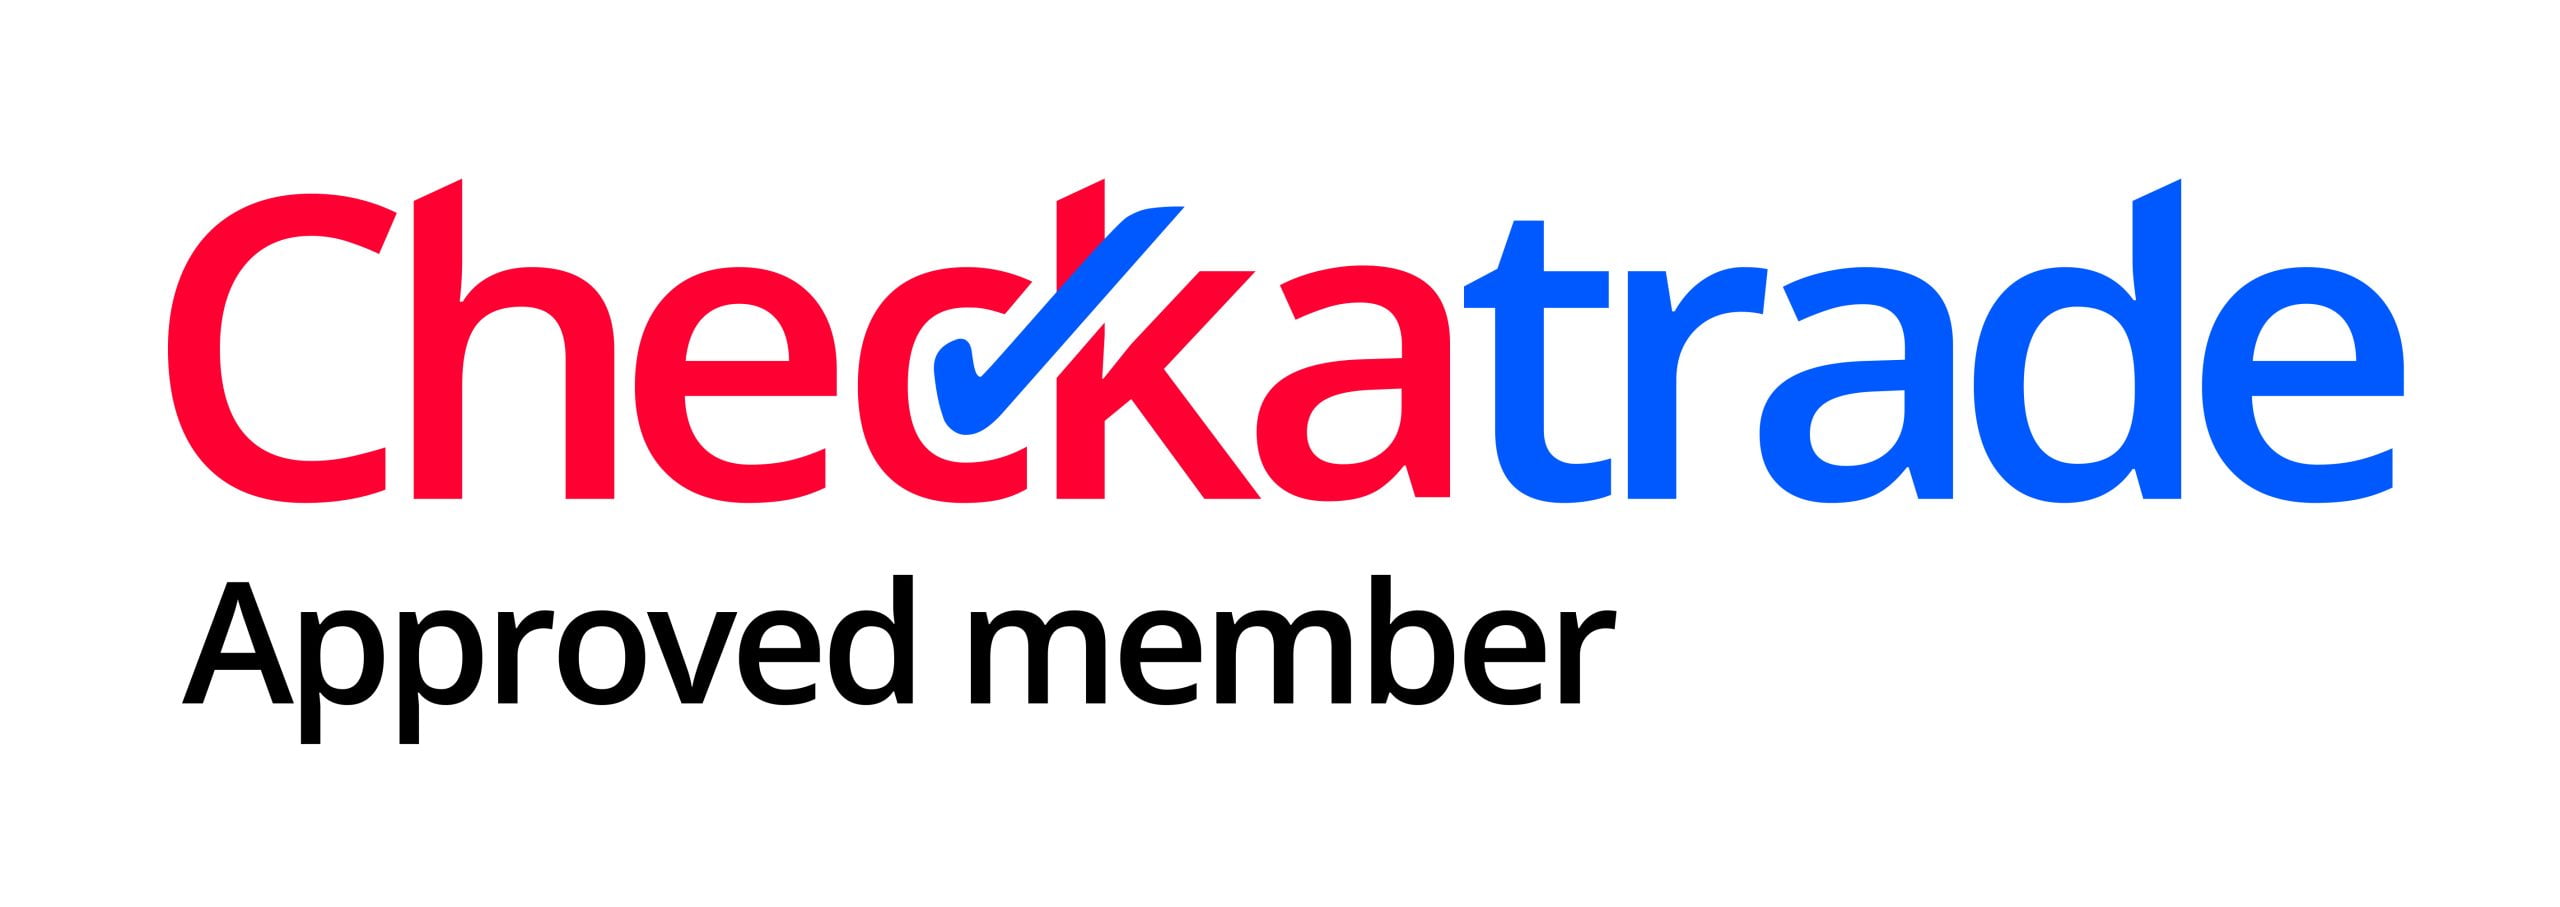 CAT Approved member logo